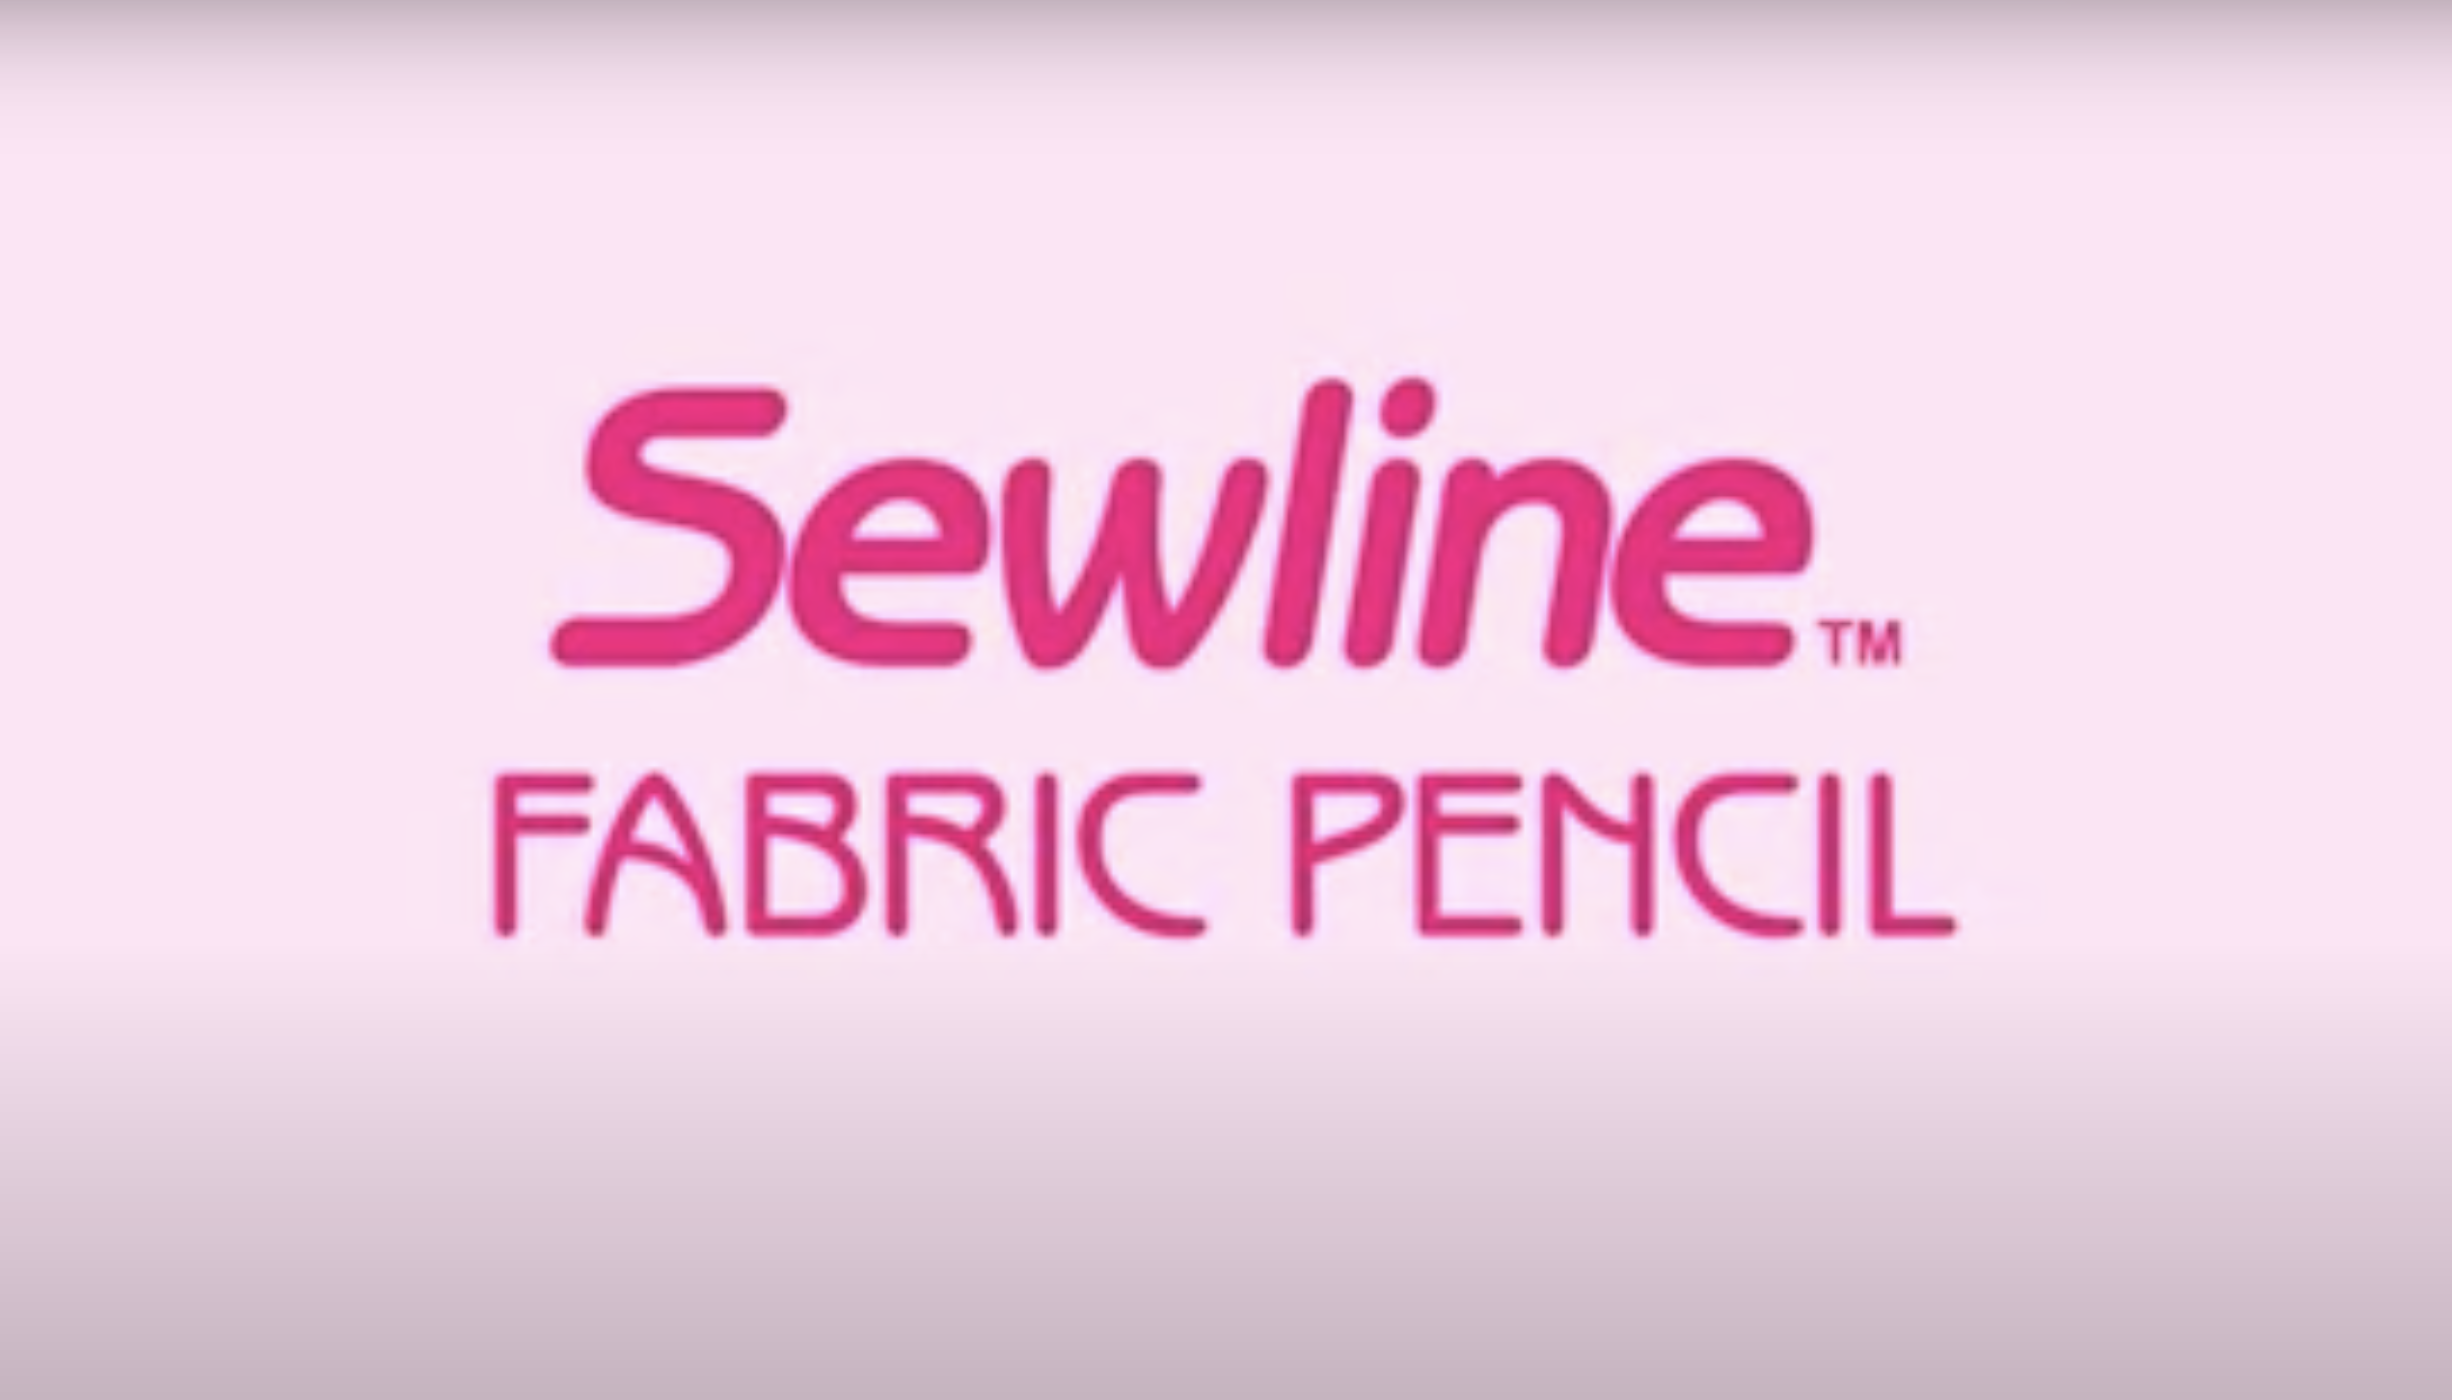 Sewline Fabric Mechanical Pencil Black - 4989783070379